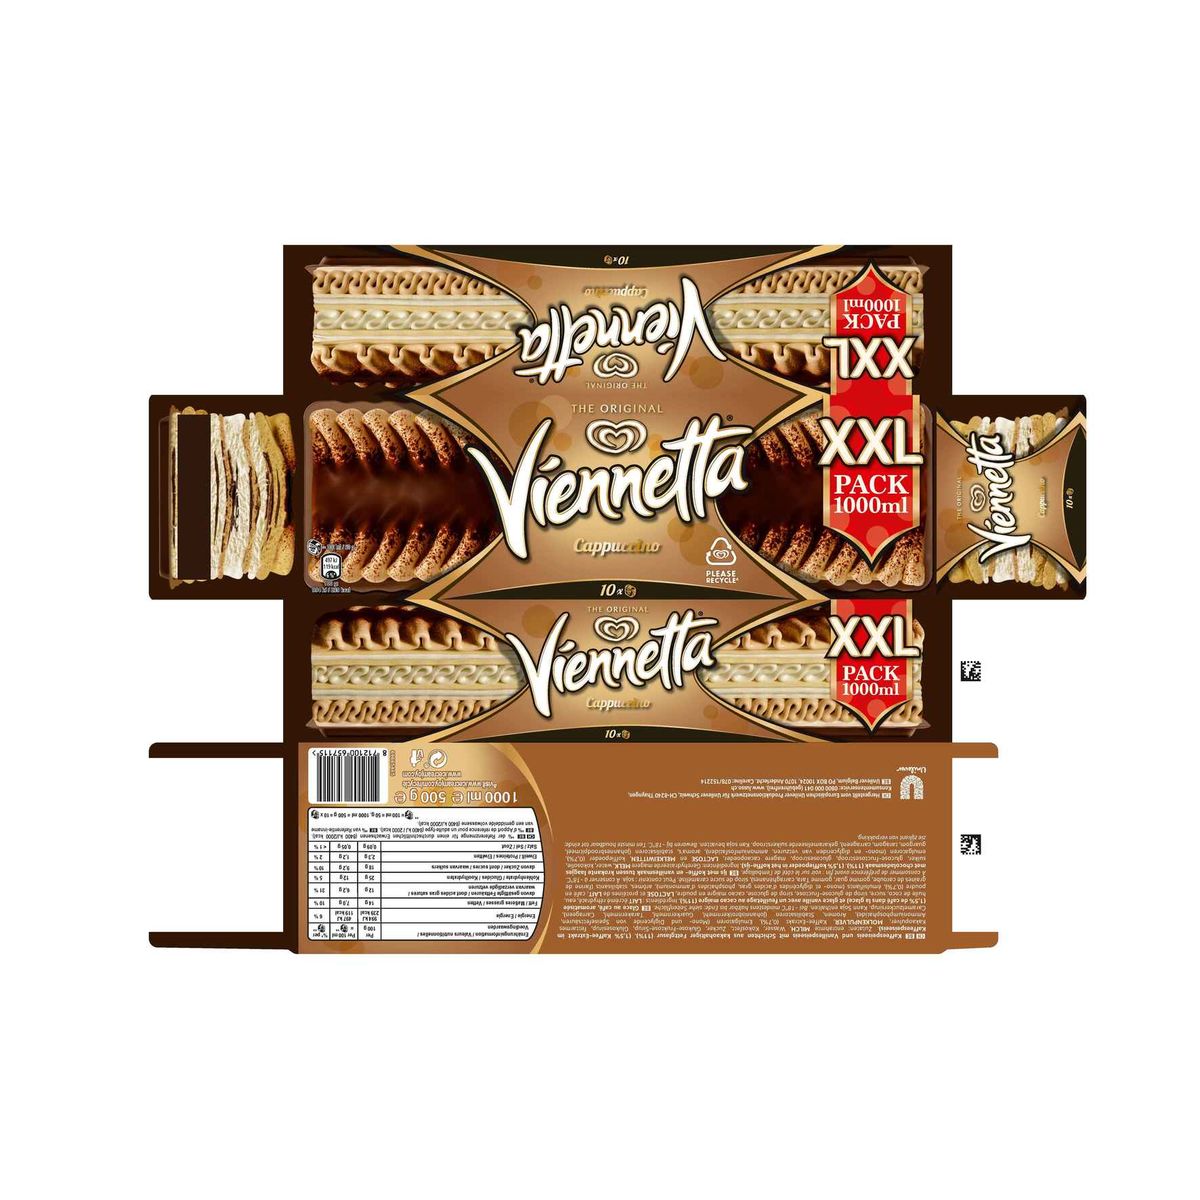 Viennetta Cappuccino XXL Pack 1000 ml